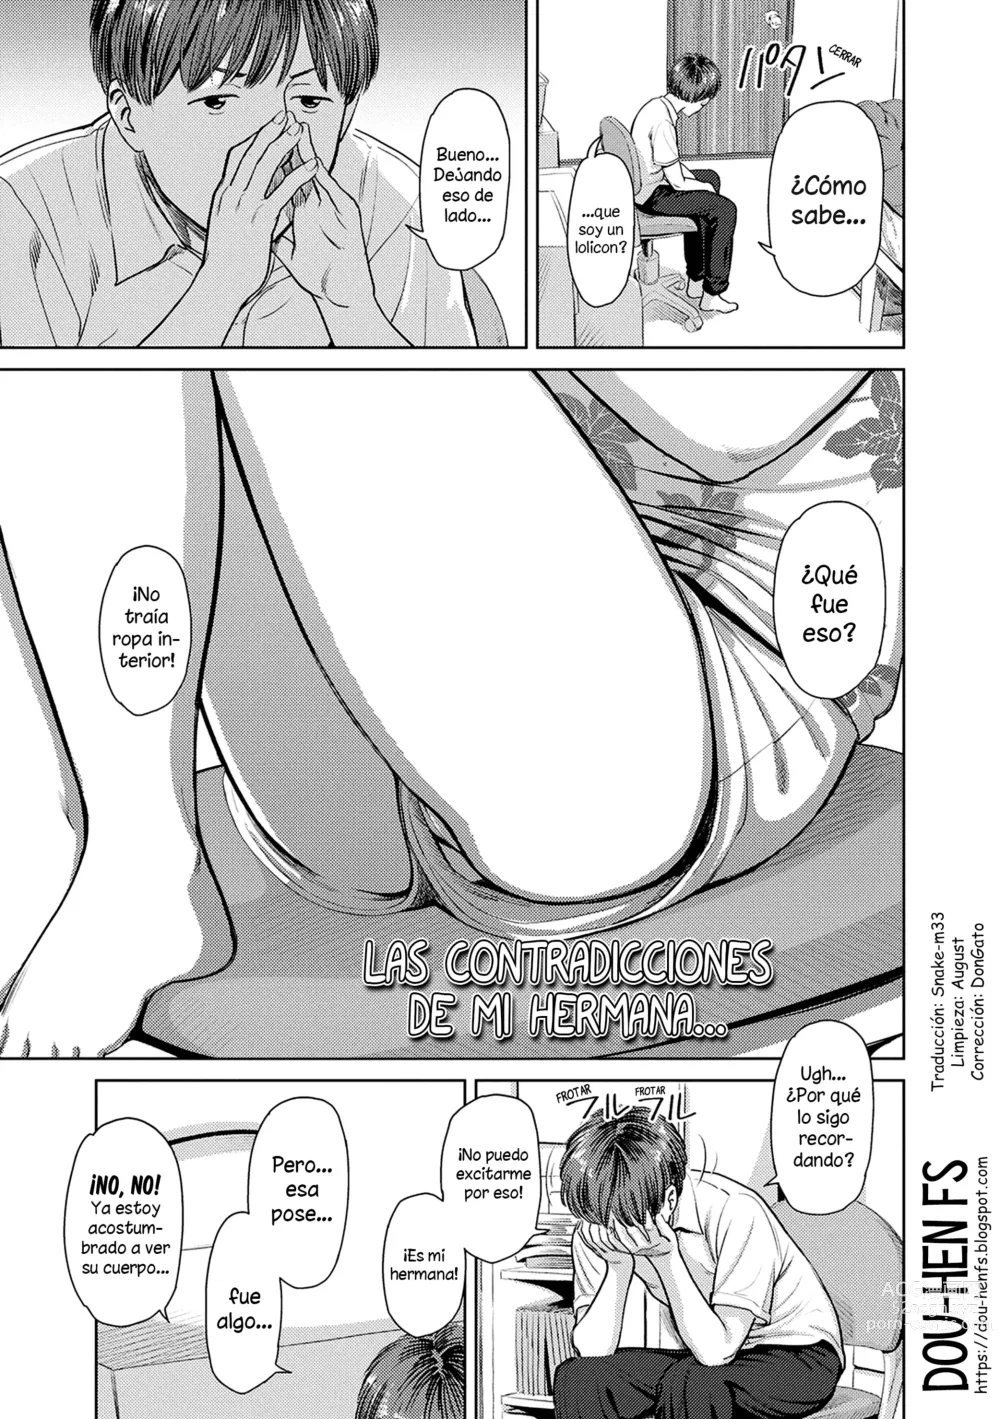 Page 7 of manga Bienvenido a casa